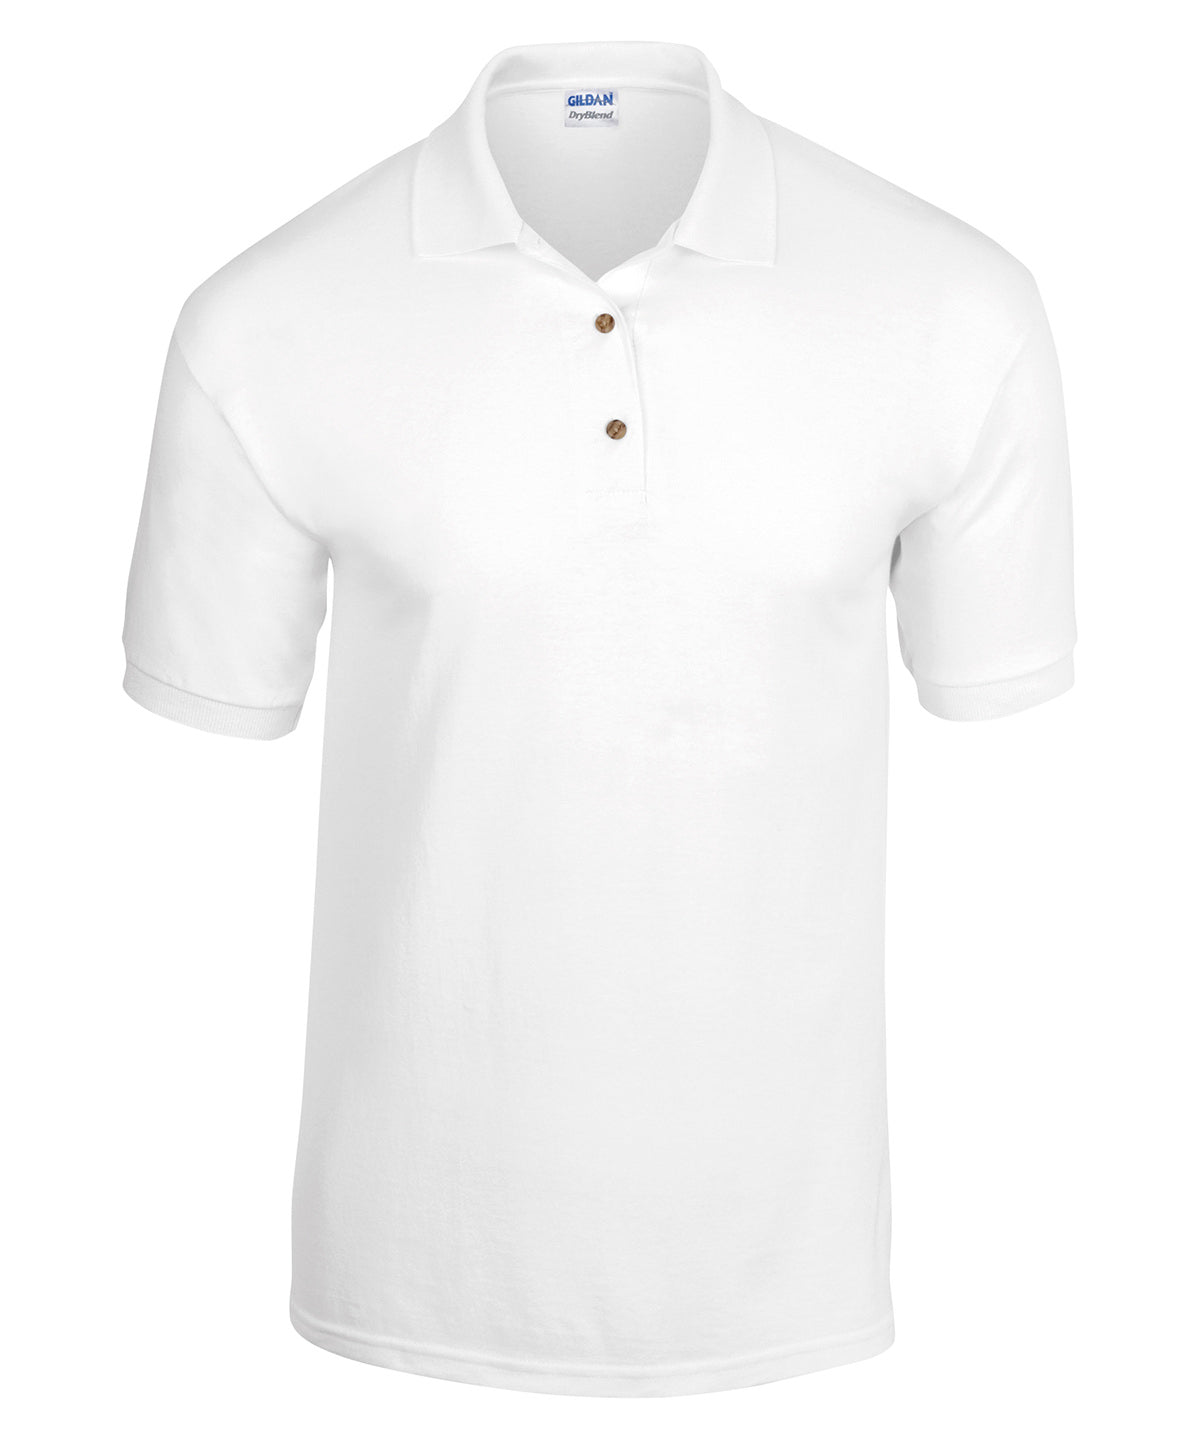 Personalised Polo Shirts - Dark Grey Gildan DryBlend® Jersey knit polo